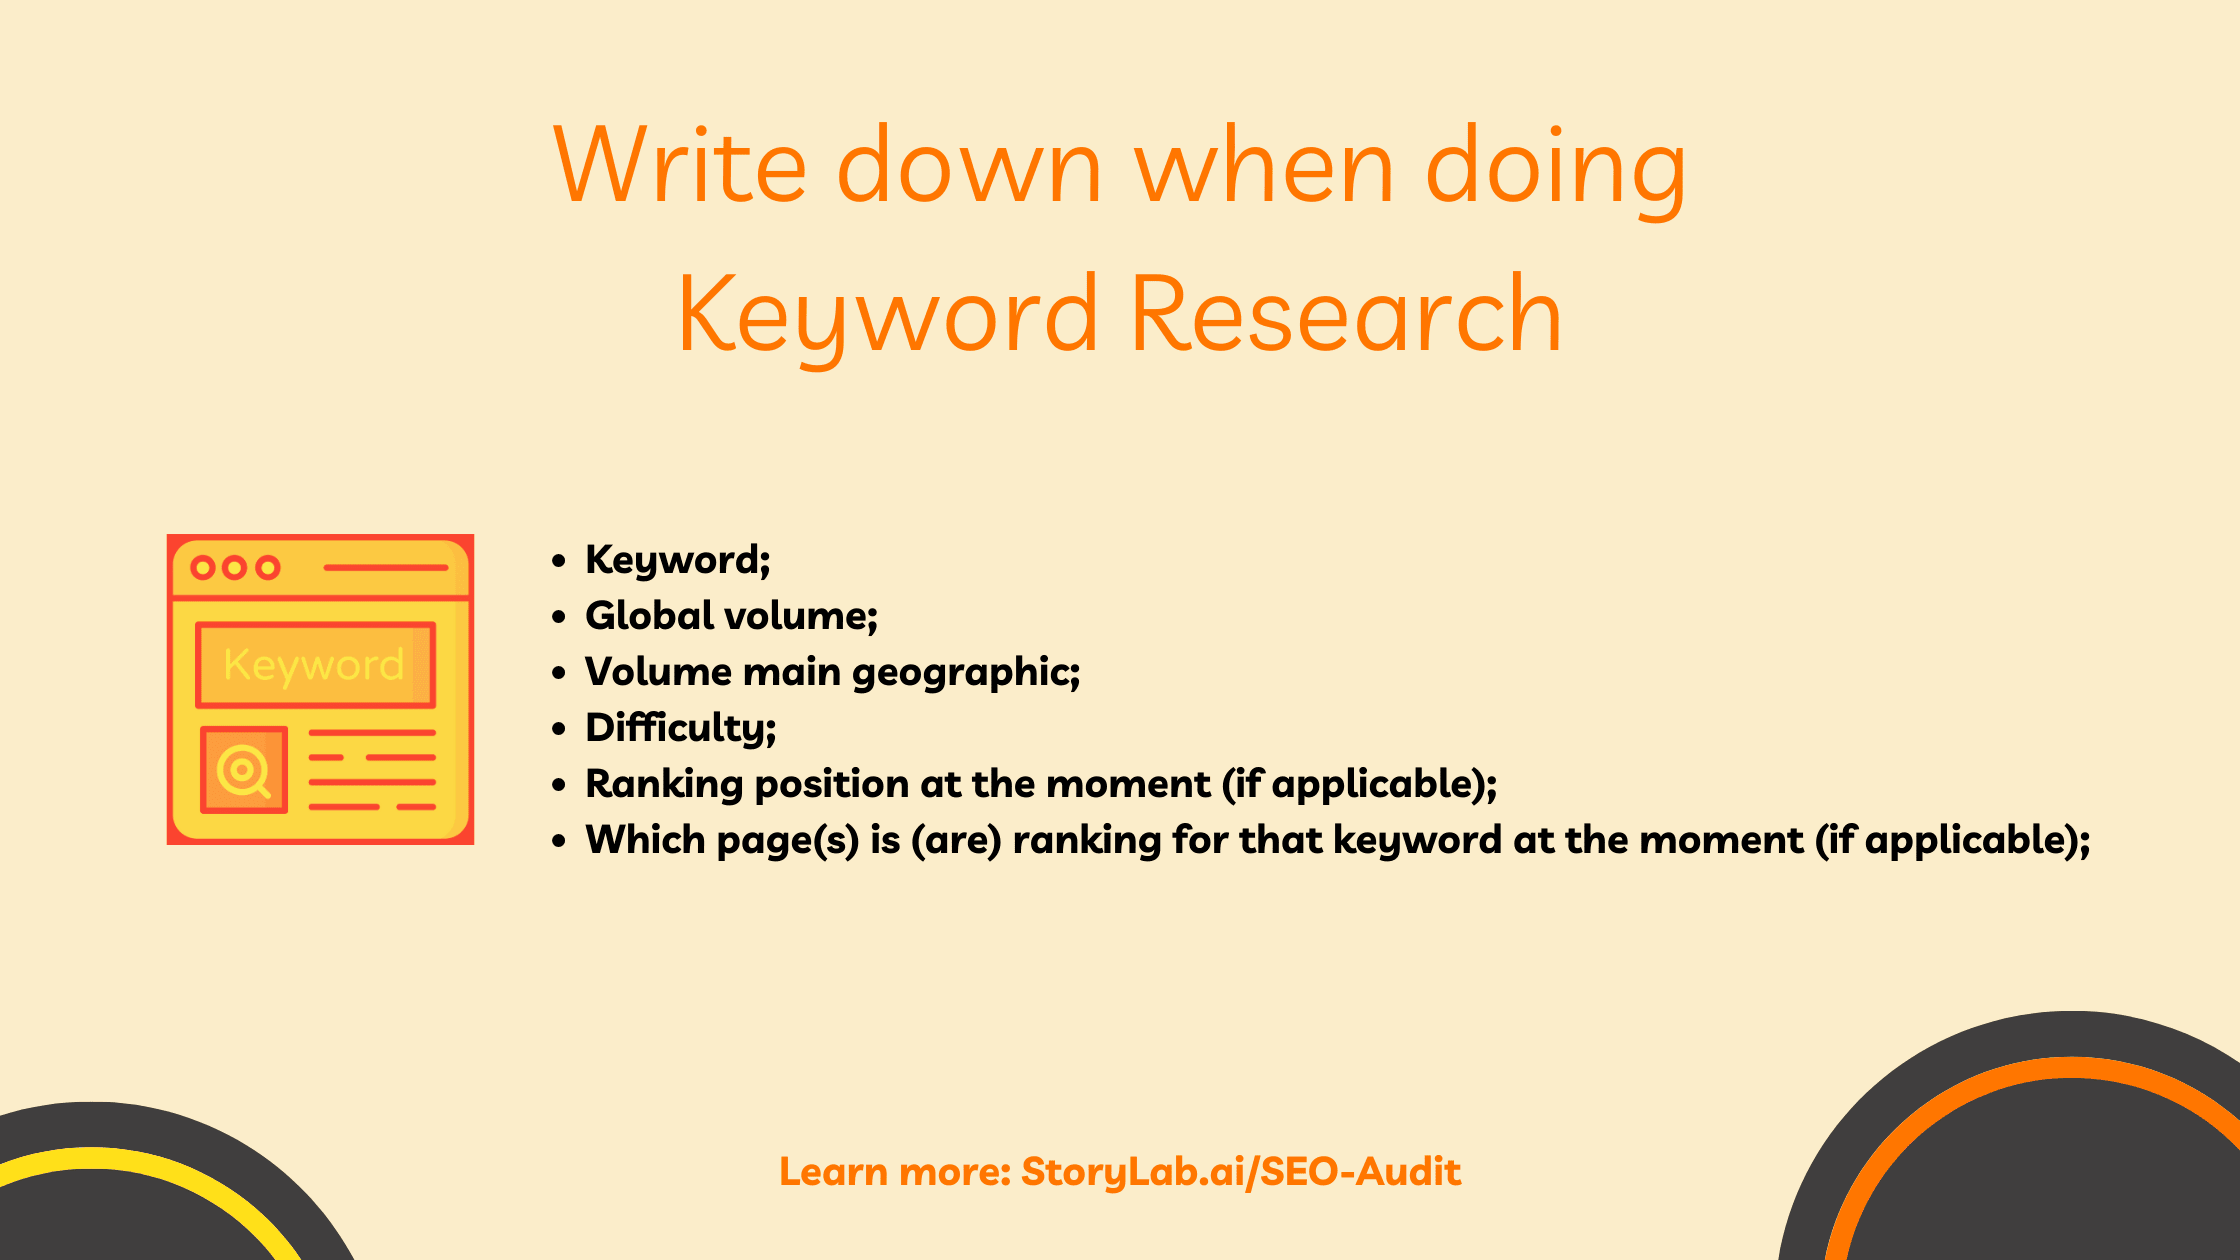 Write down when doing Keyword Research